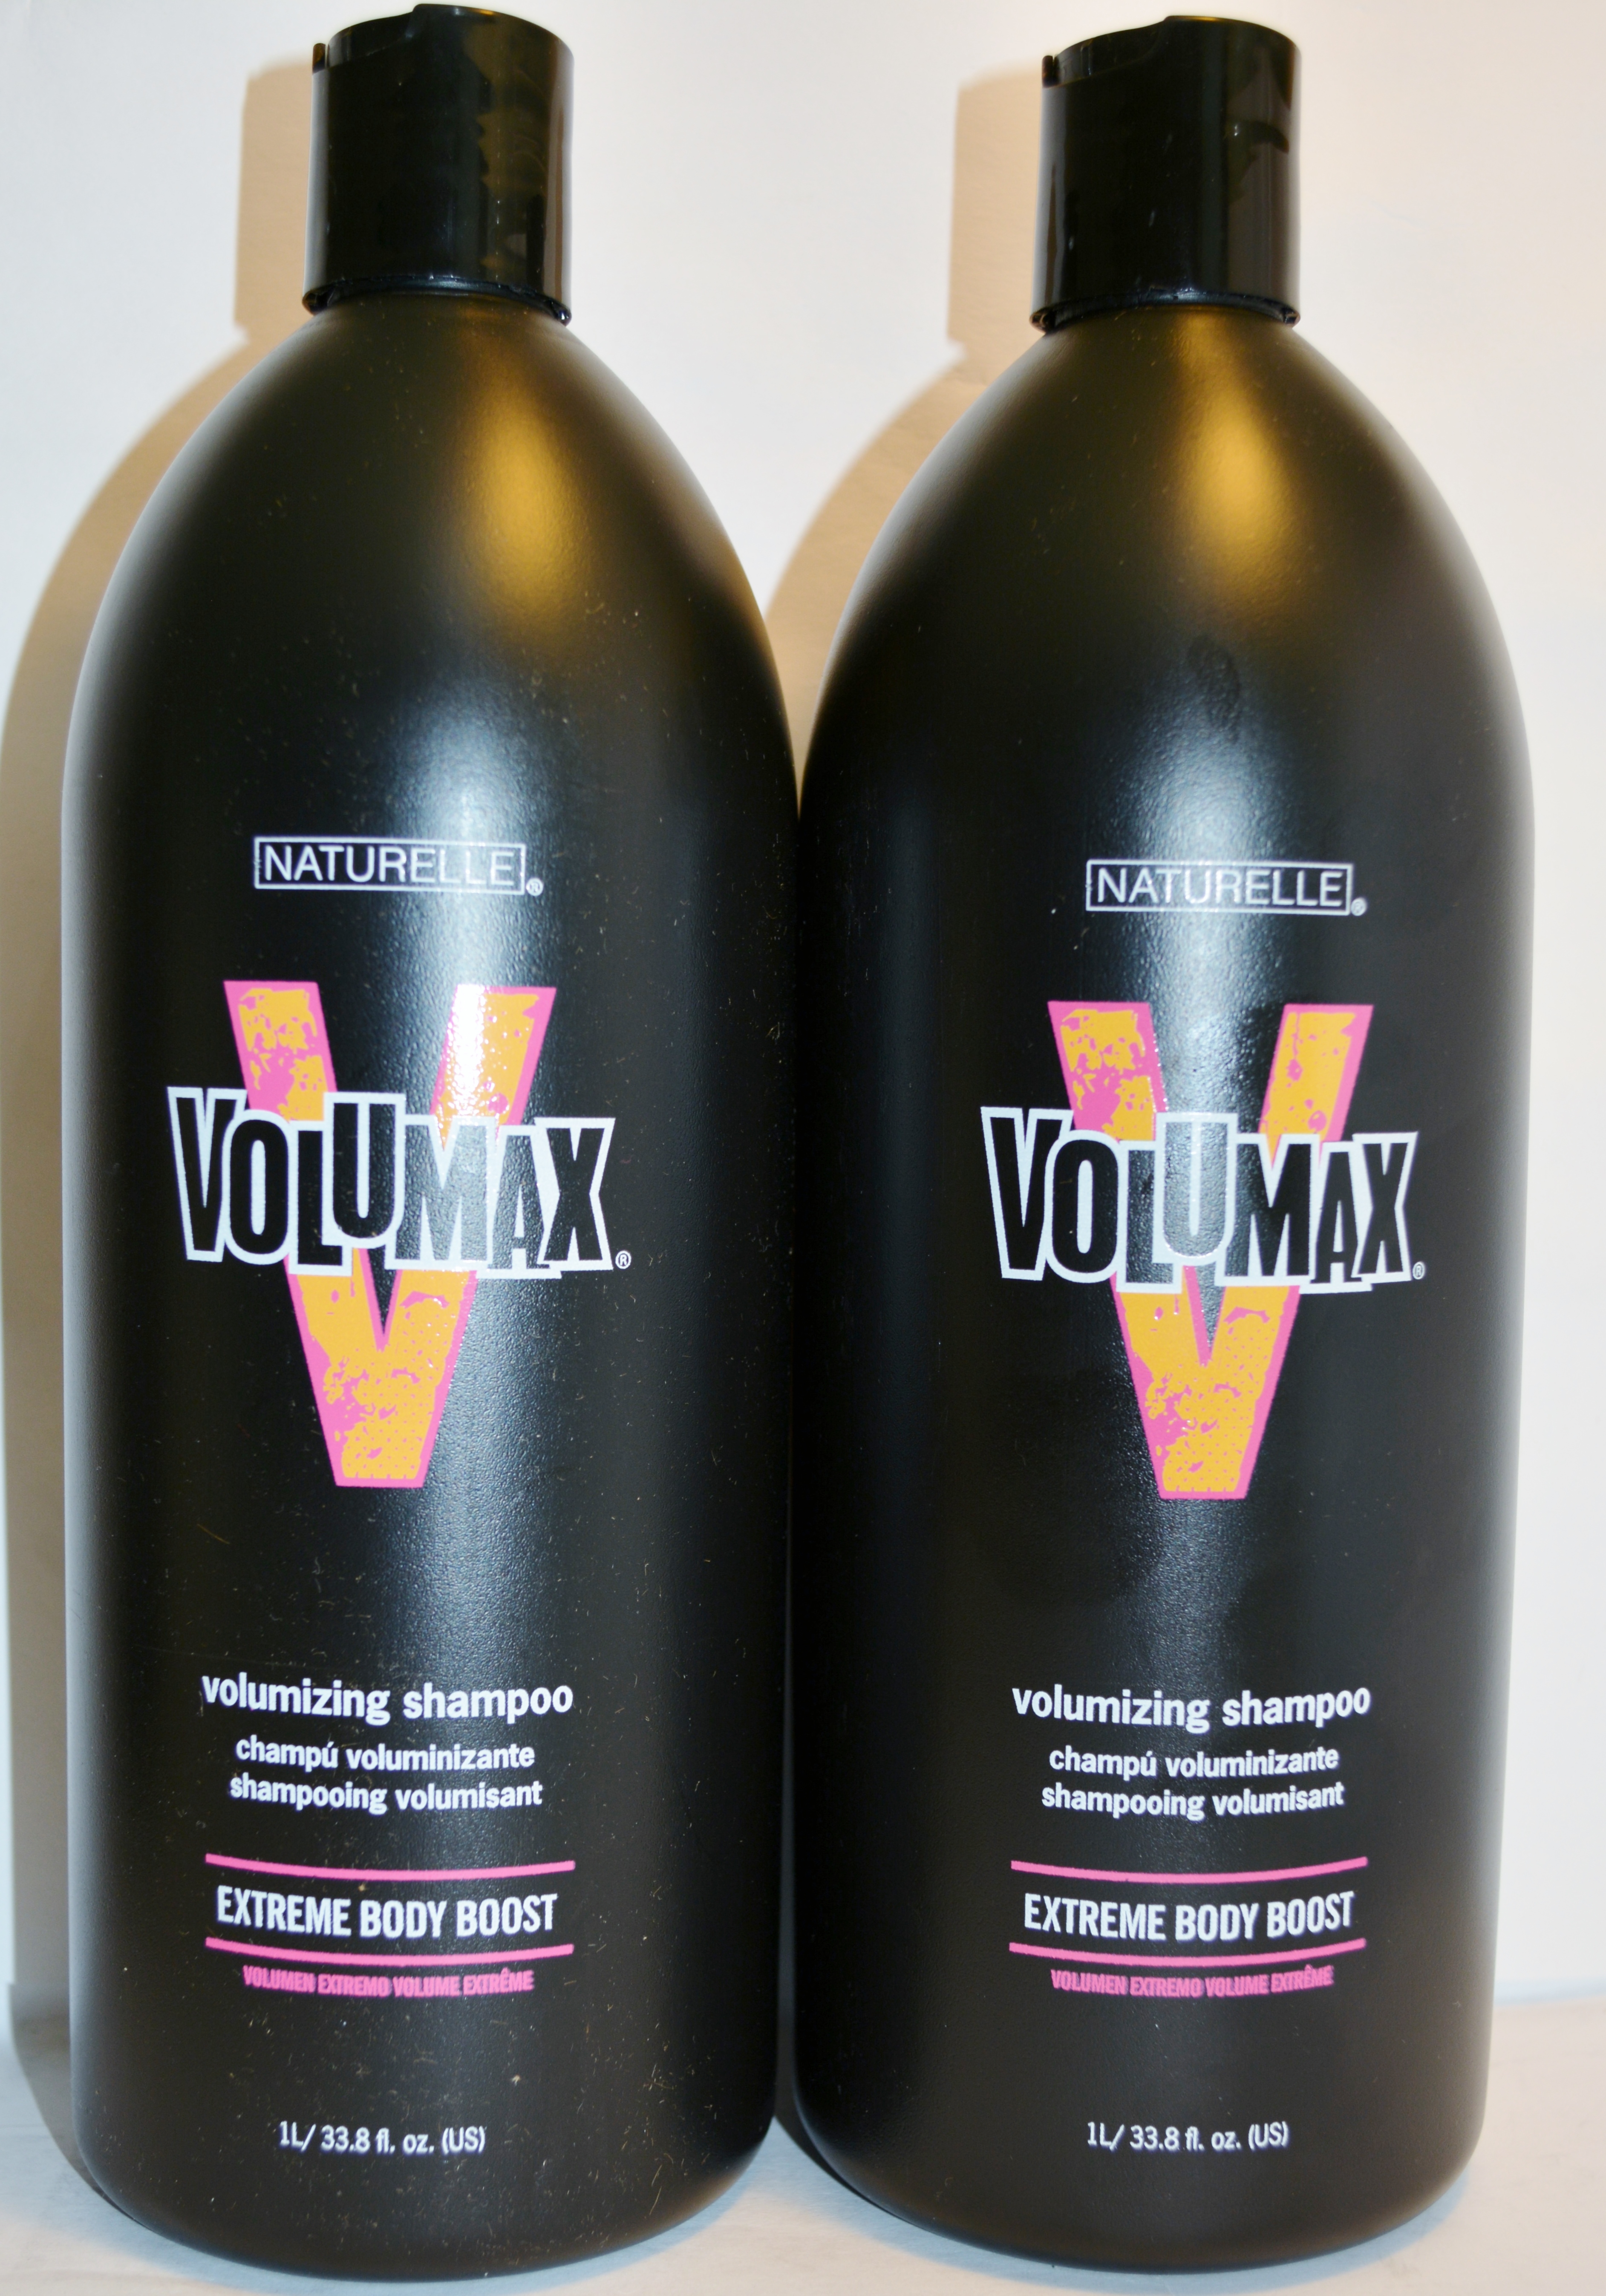 Naturelle Volumax Volumizing Shampoo Extreme Body Boost 33.8oz (2 pack)